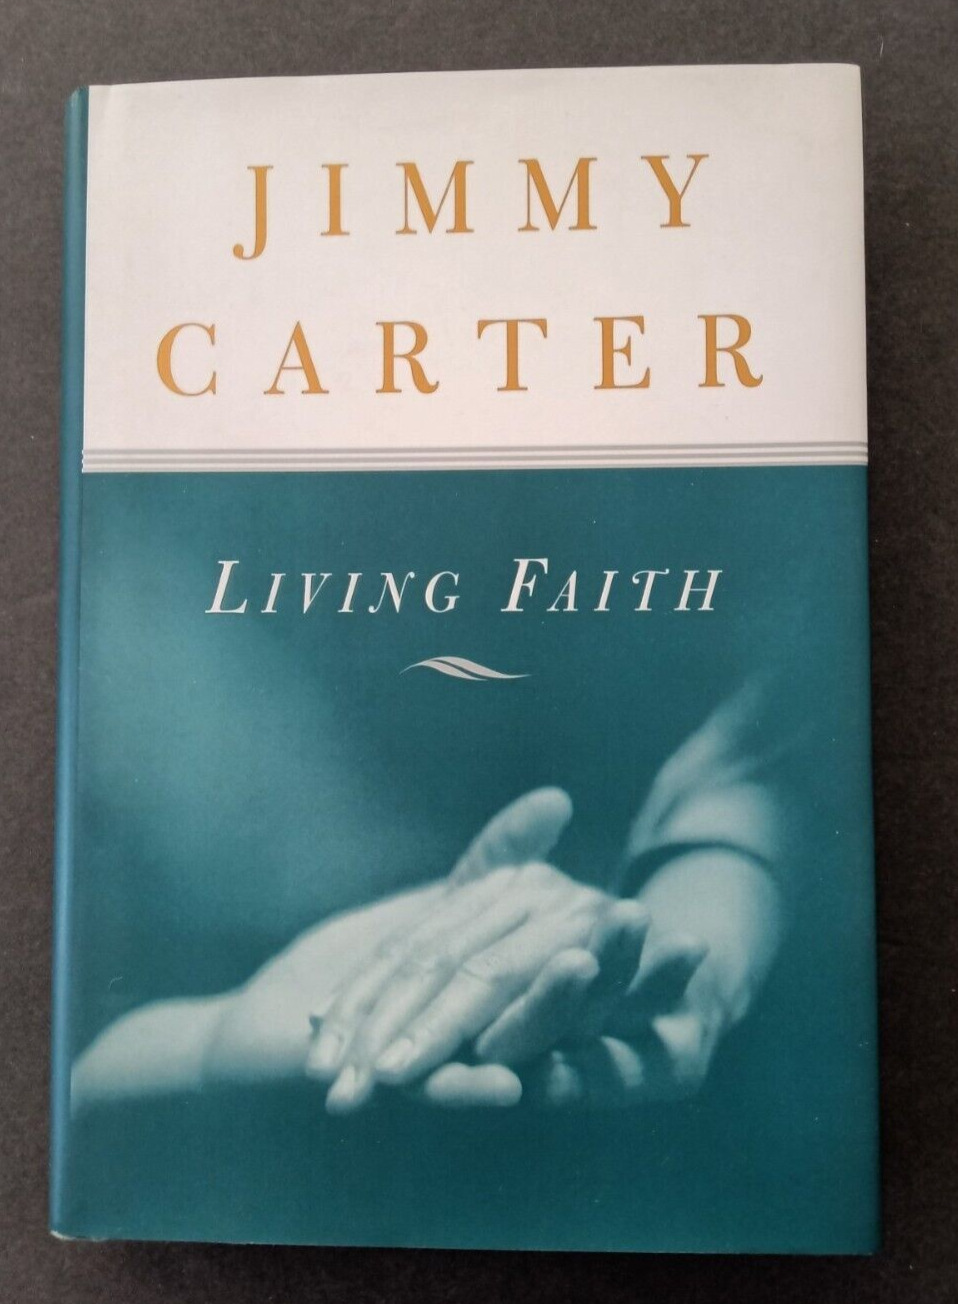 BECKETT Authenticated signed Jimmy Carter book - JIMMY CARTER, Living Faith